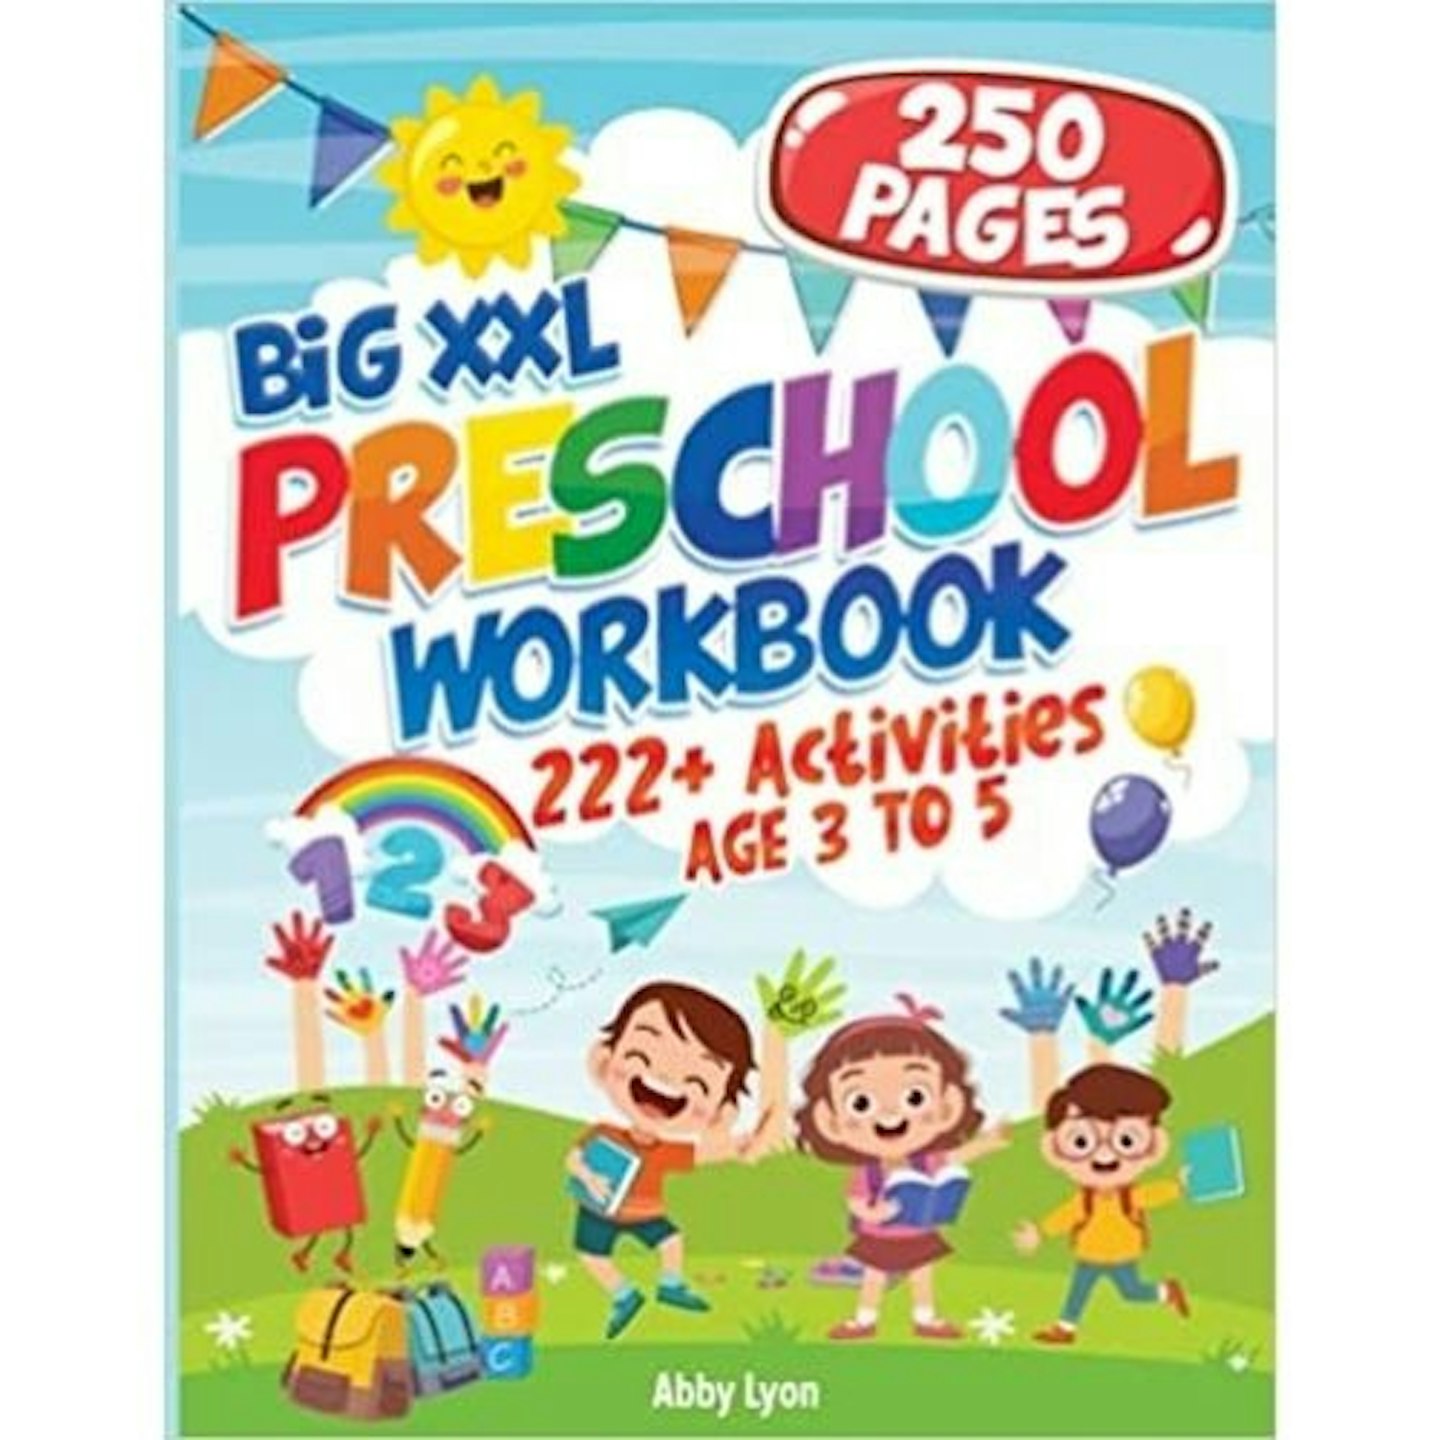 Big XXL Pre School Workbook